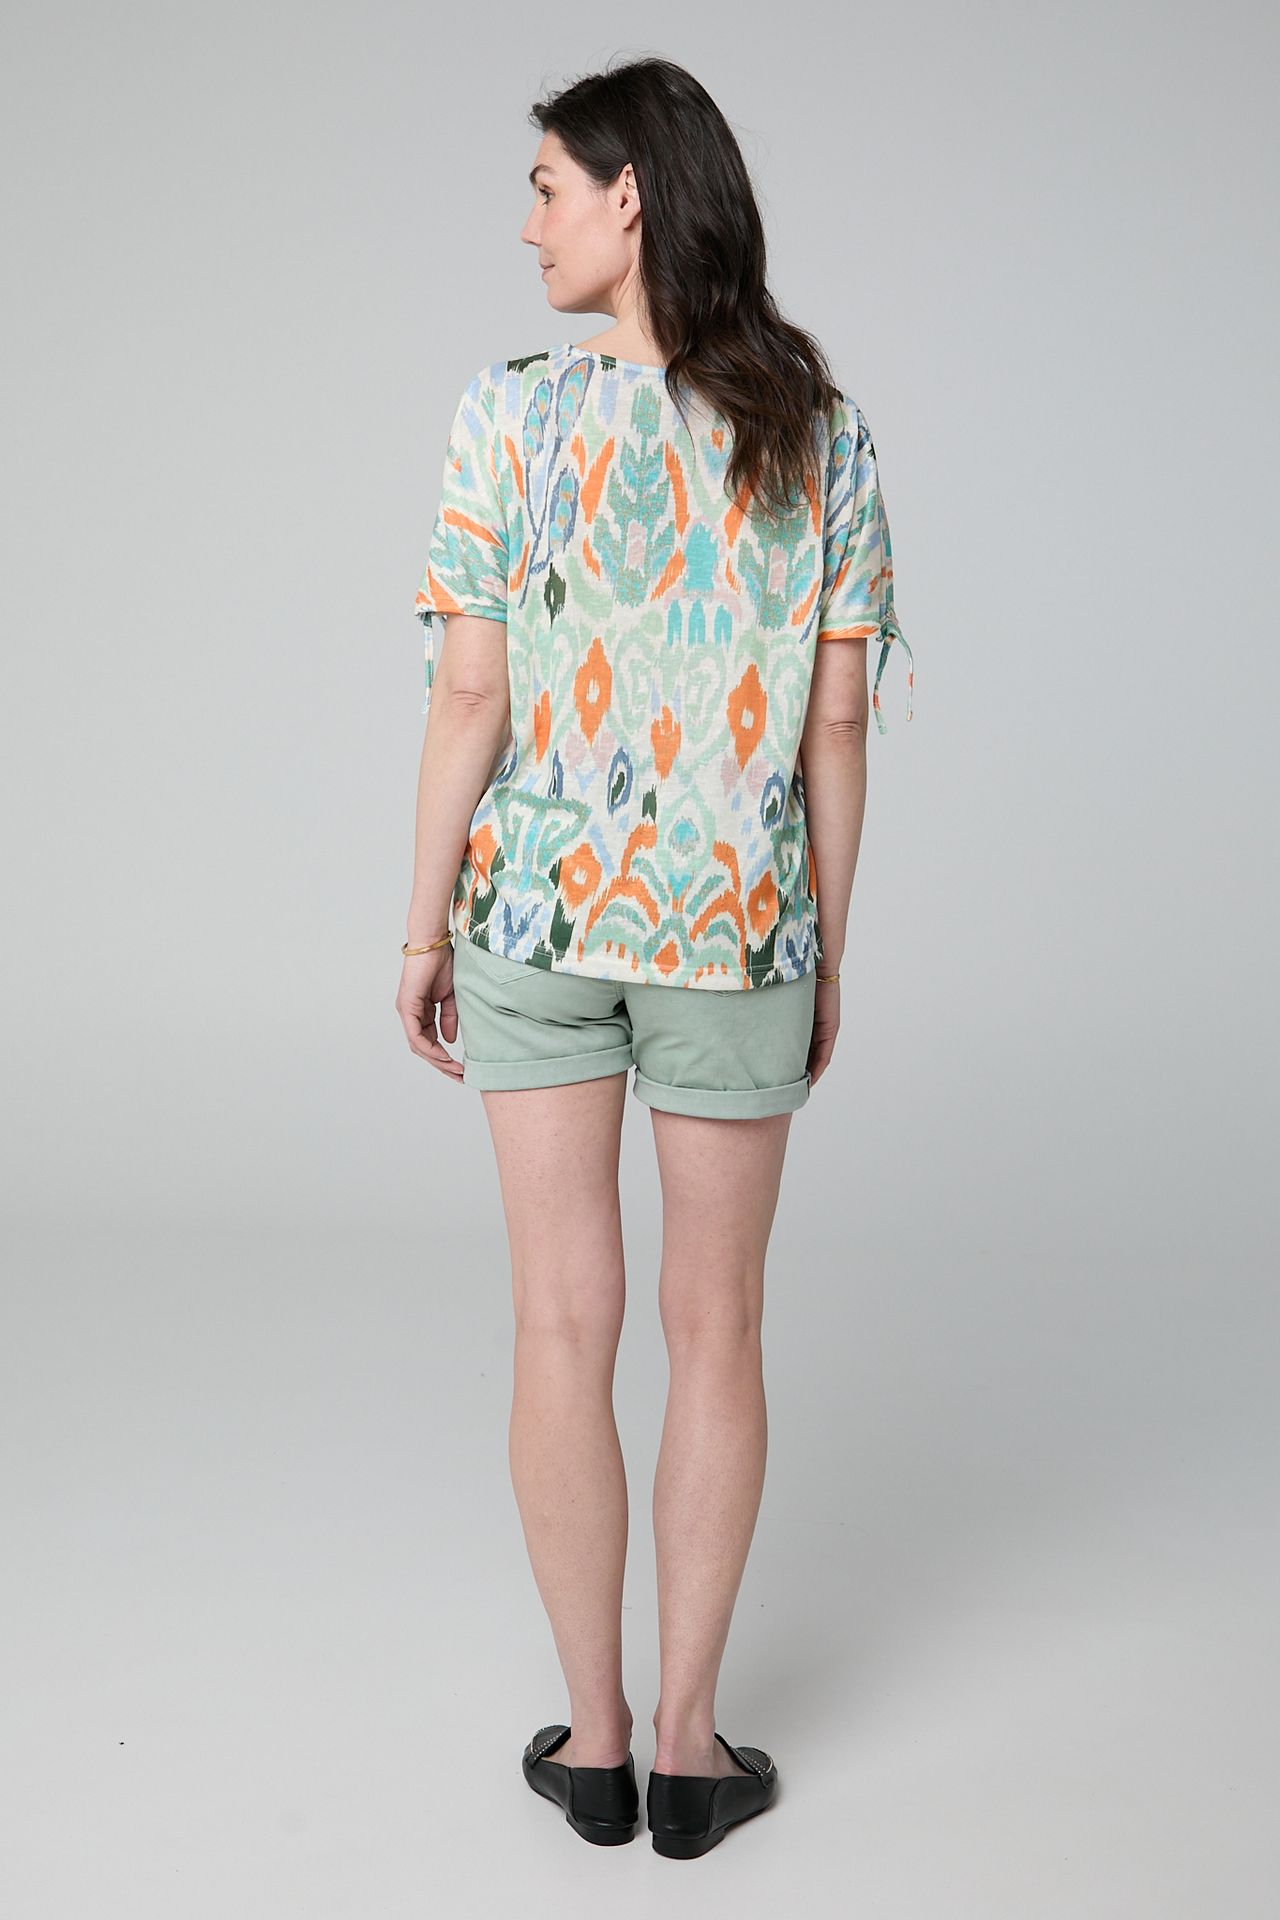 Norah Shirt met koordjes multicolor 214106-002